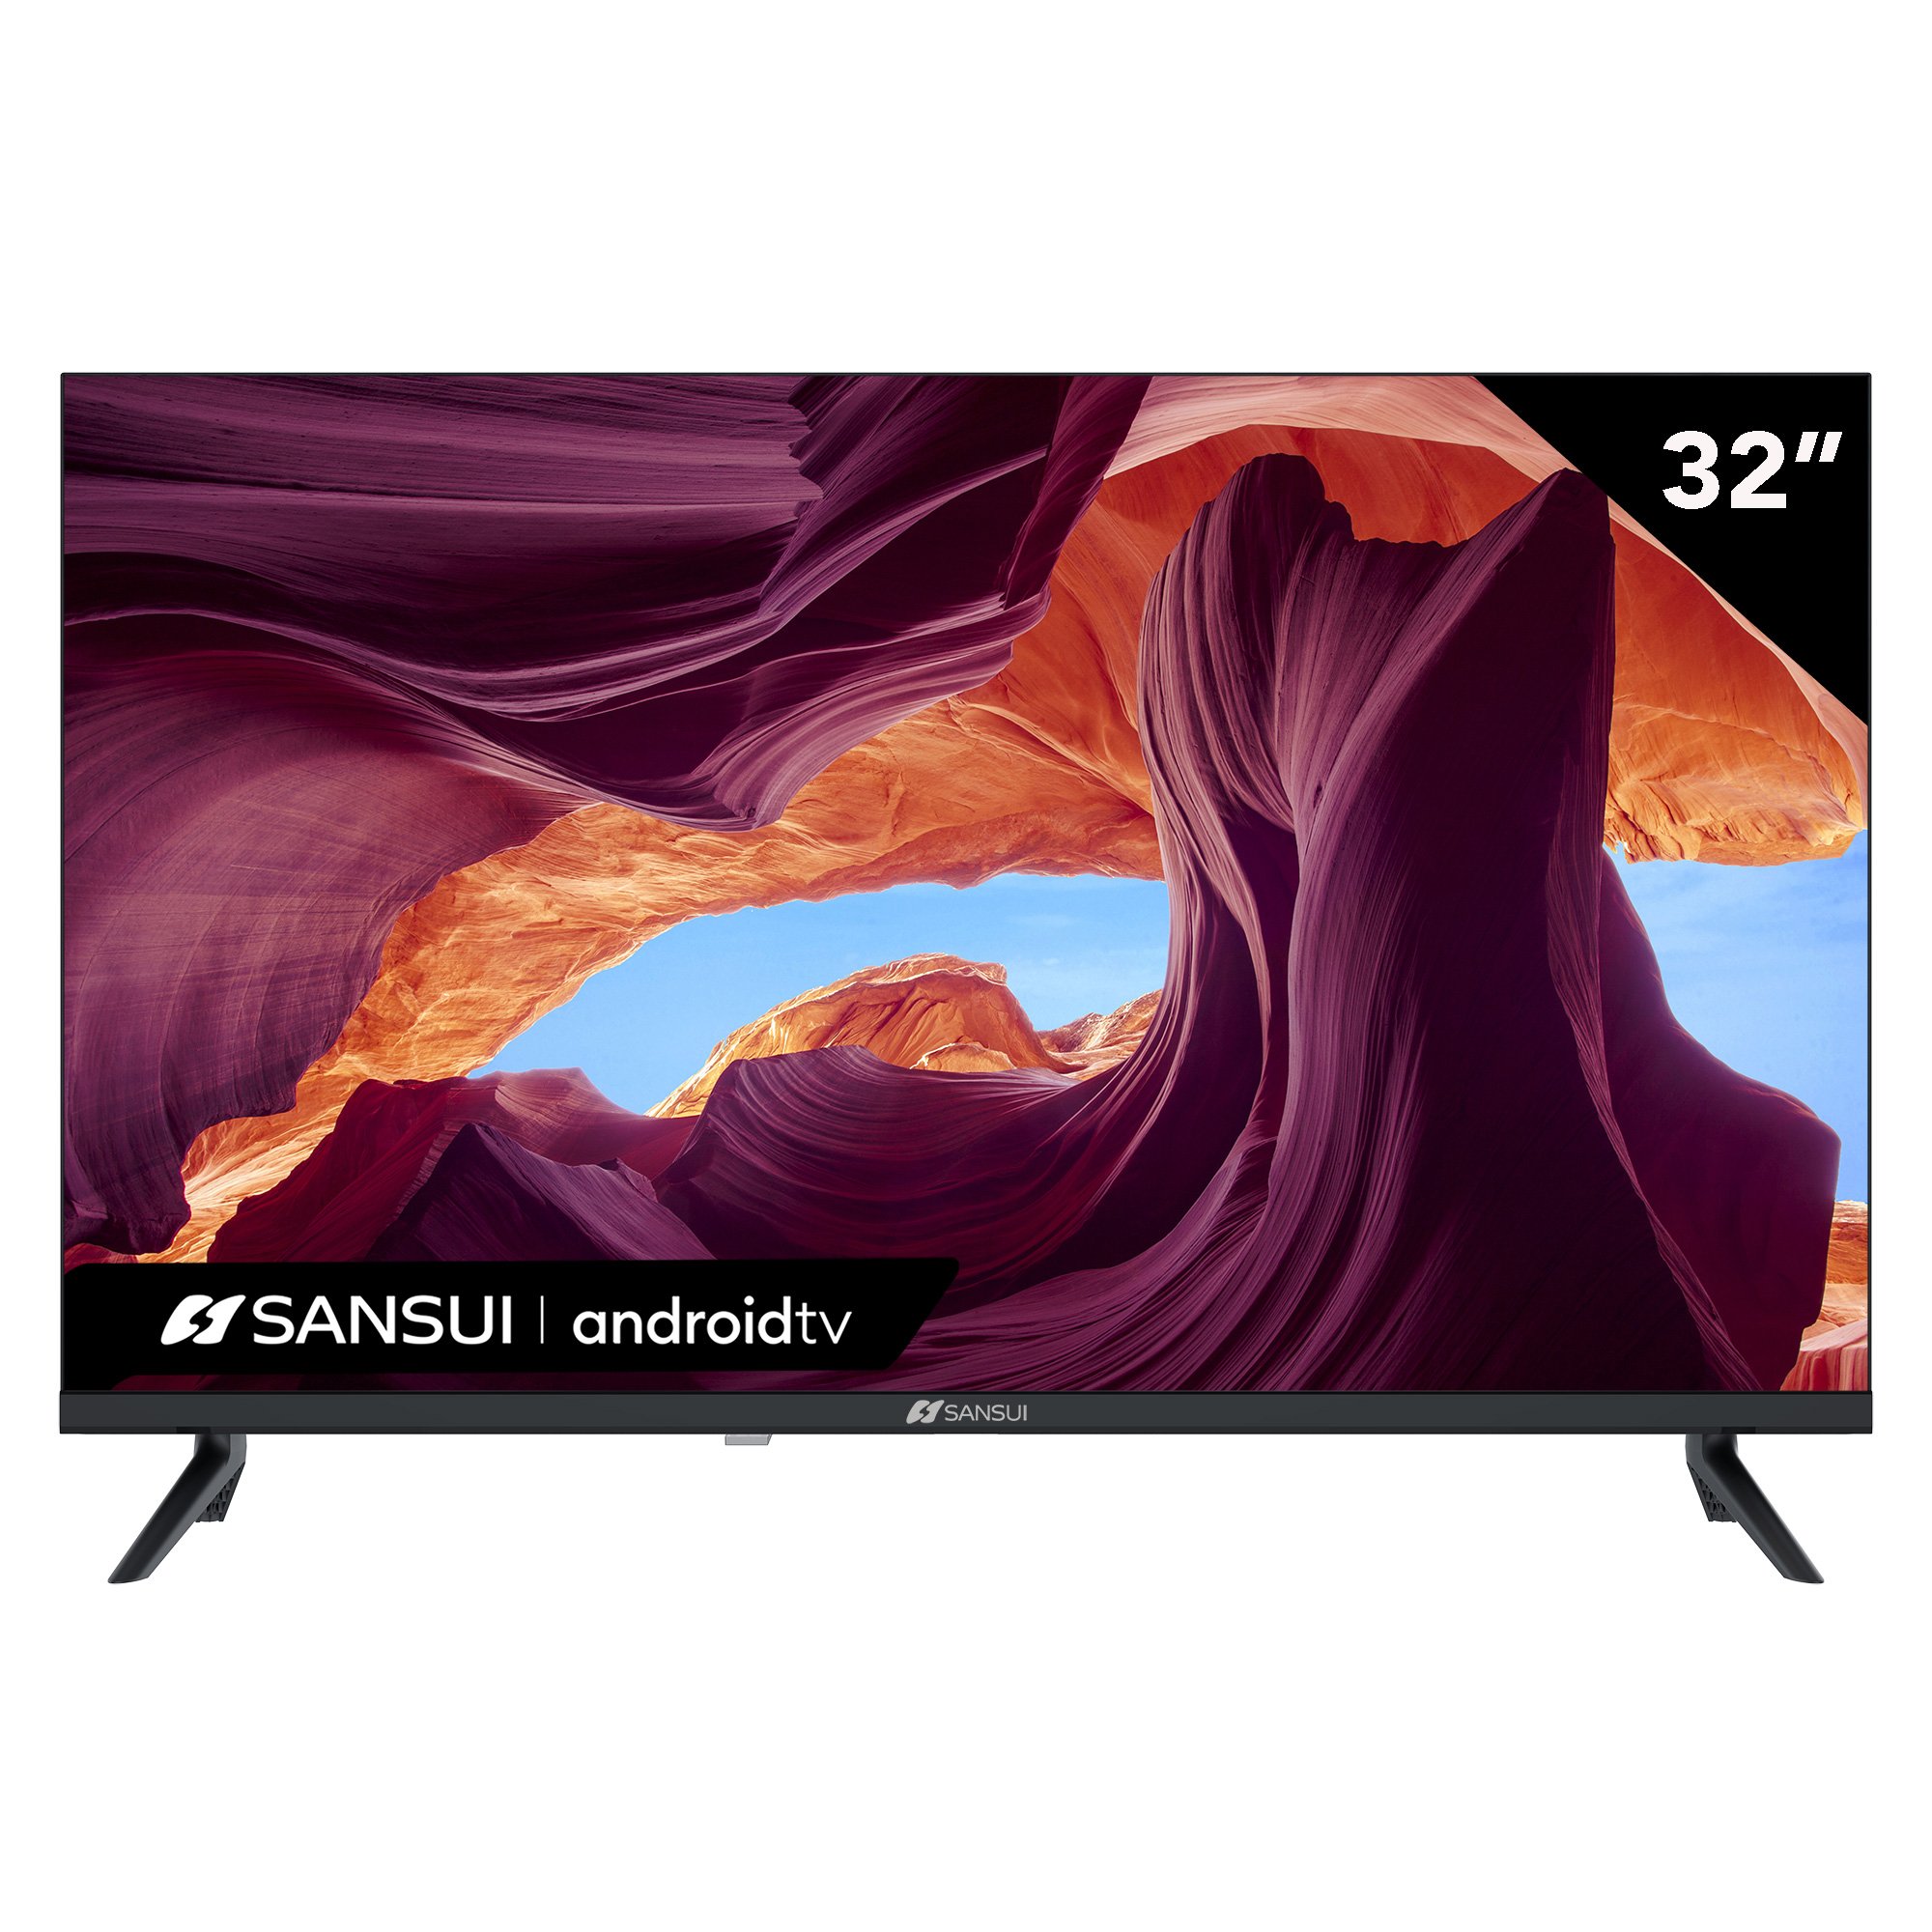 Pantalla Smart TV Sansui LED de 24 pulgadas HD SMX24N1NF